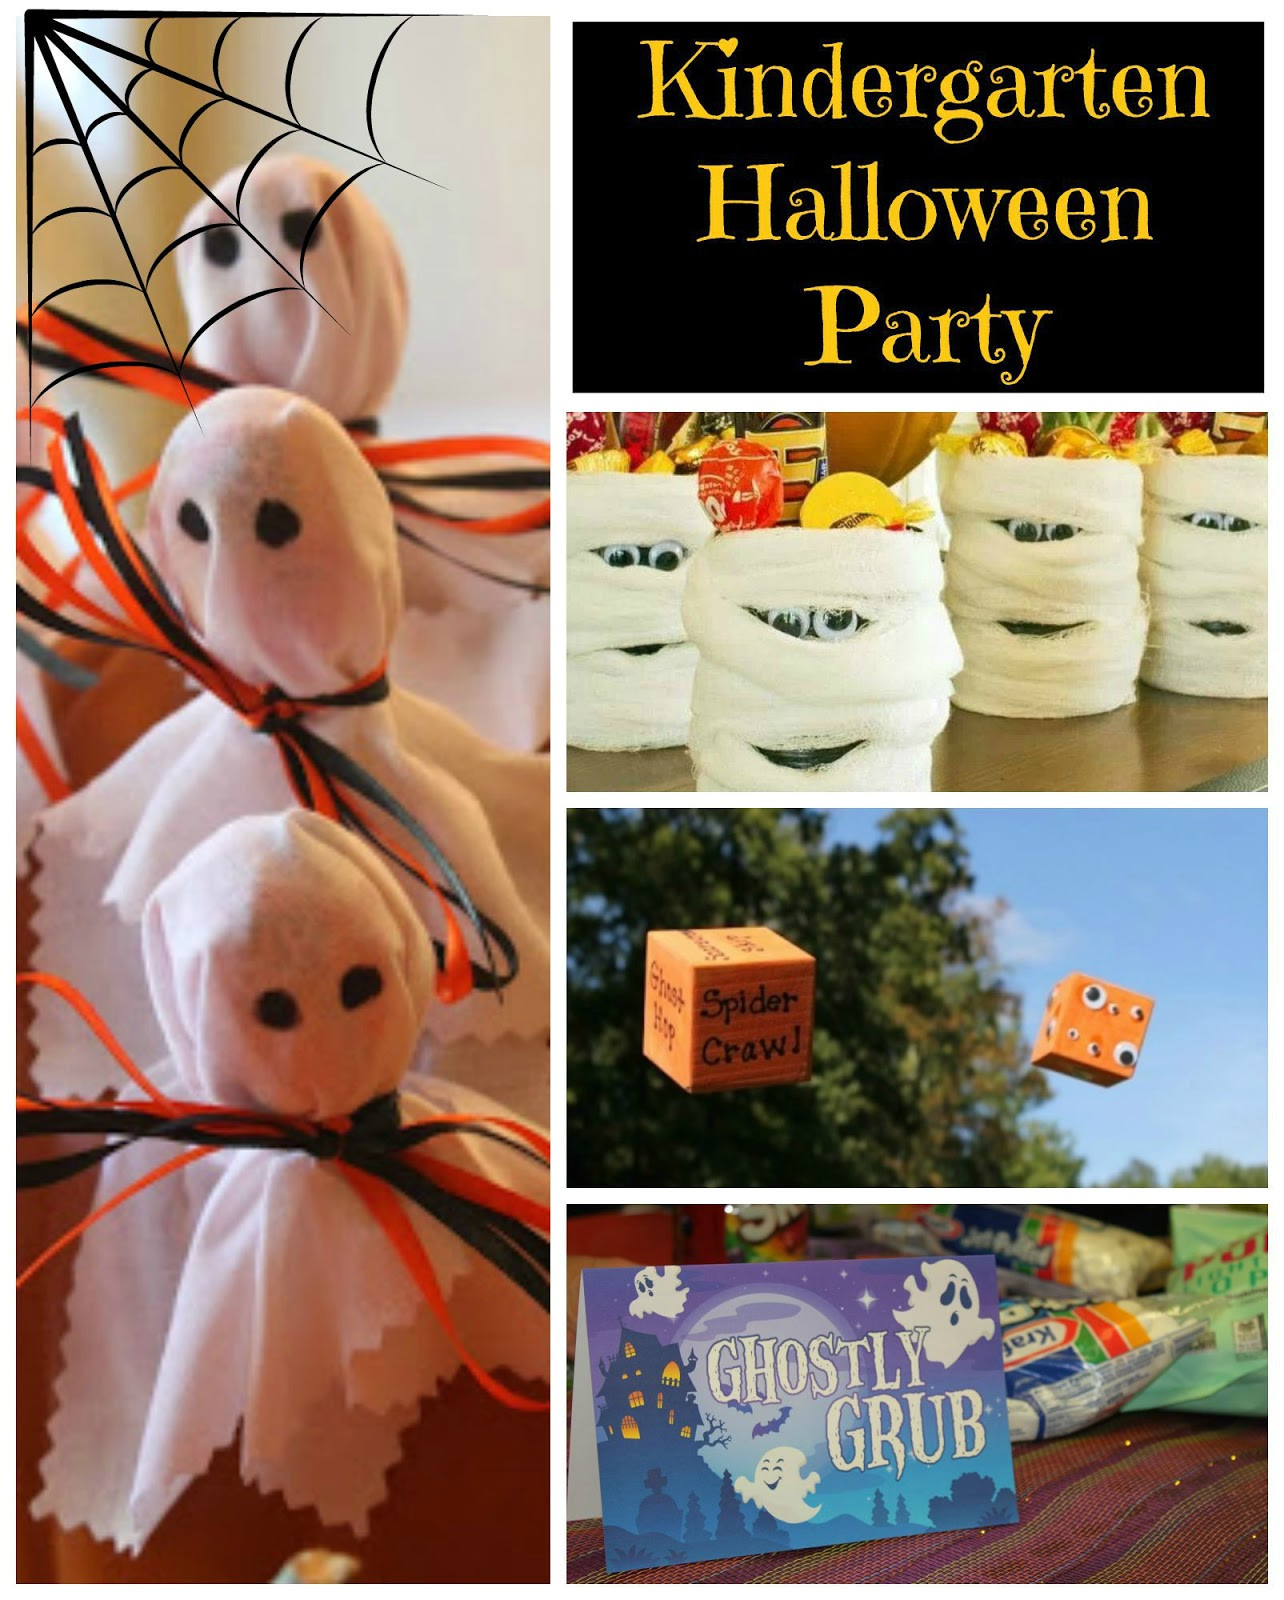 Halloween Party Ideas For Kindergarten Classes
 Keeping up with the Kiddos Kindergarten Halloween Party